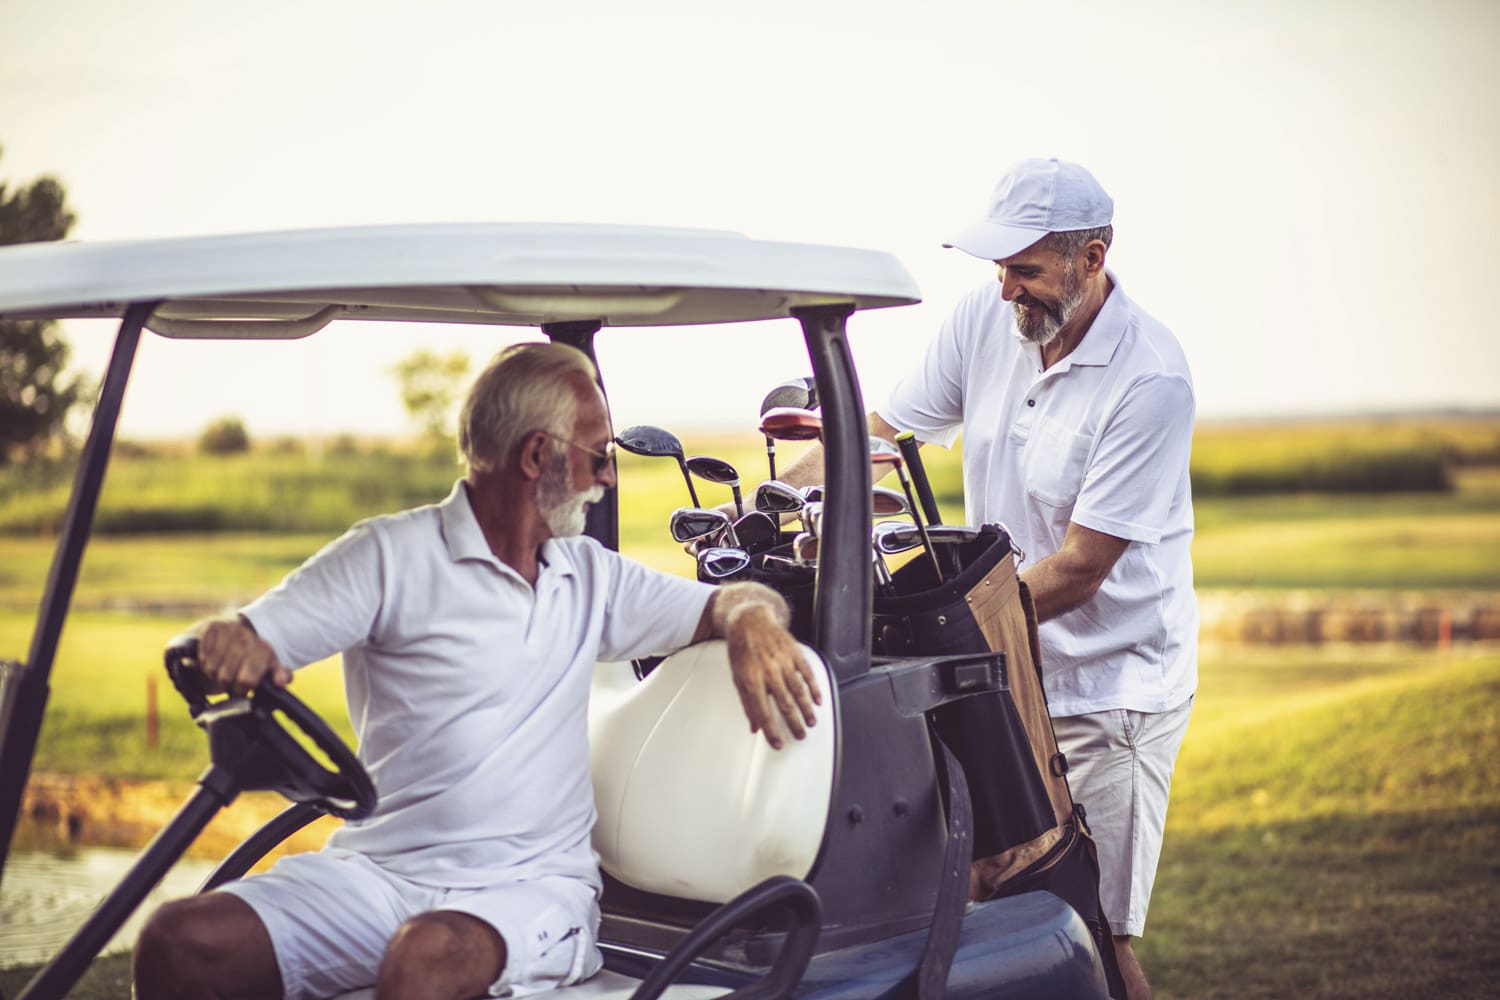 Two senior men golfers on court. Man sitting in golf cart. Phoenix retirement communities